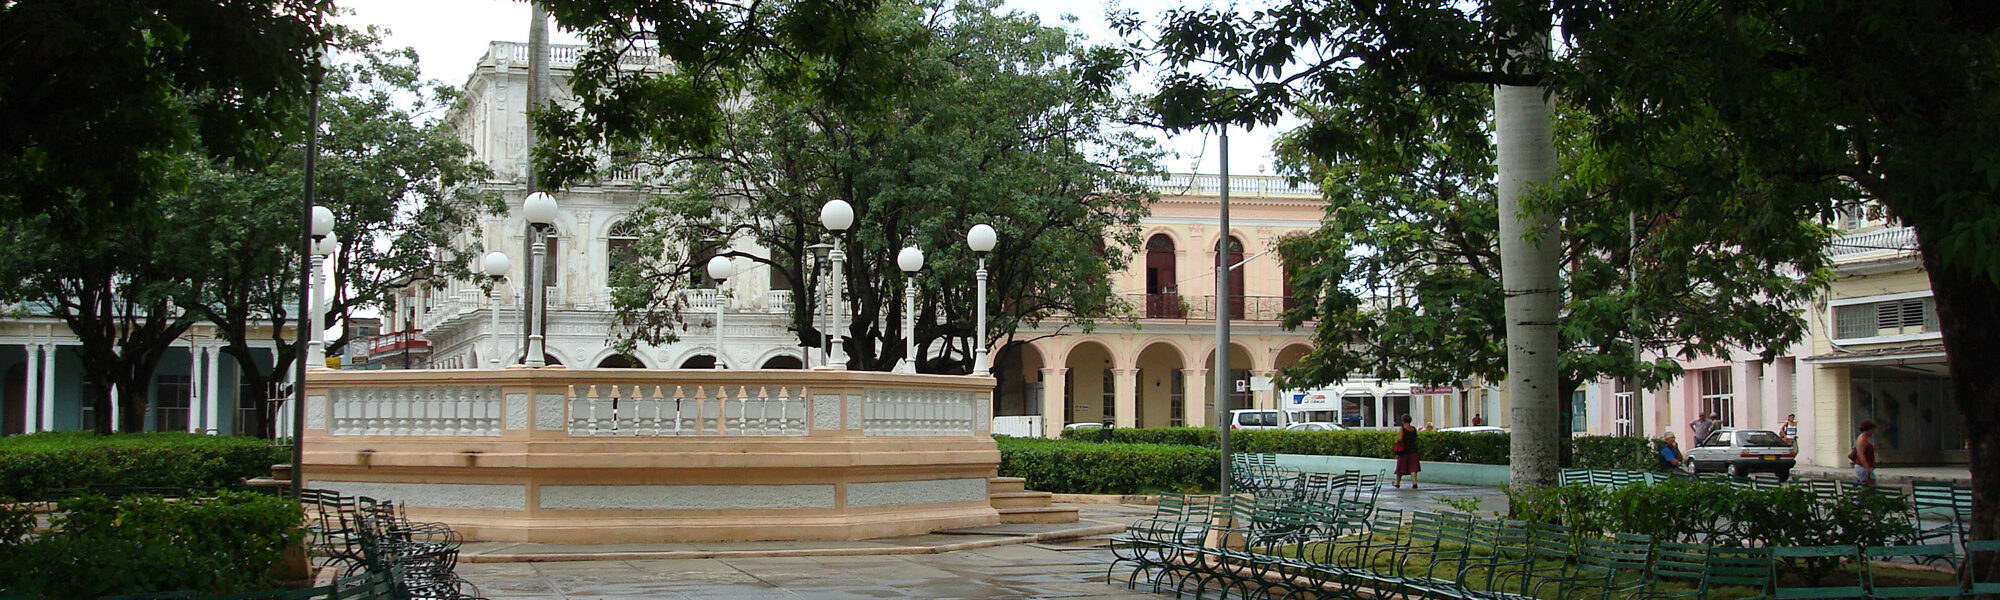 Parque Serafin Sánchez - Sancti Spíritus - Cuba